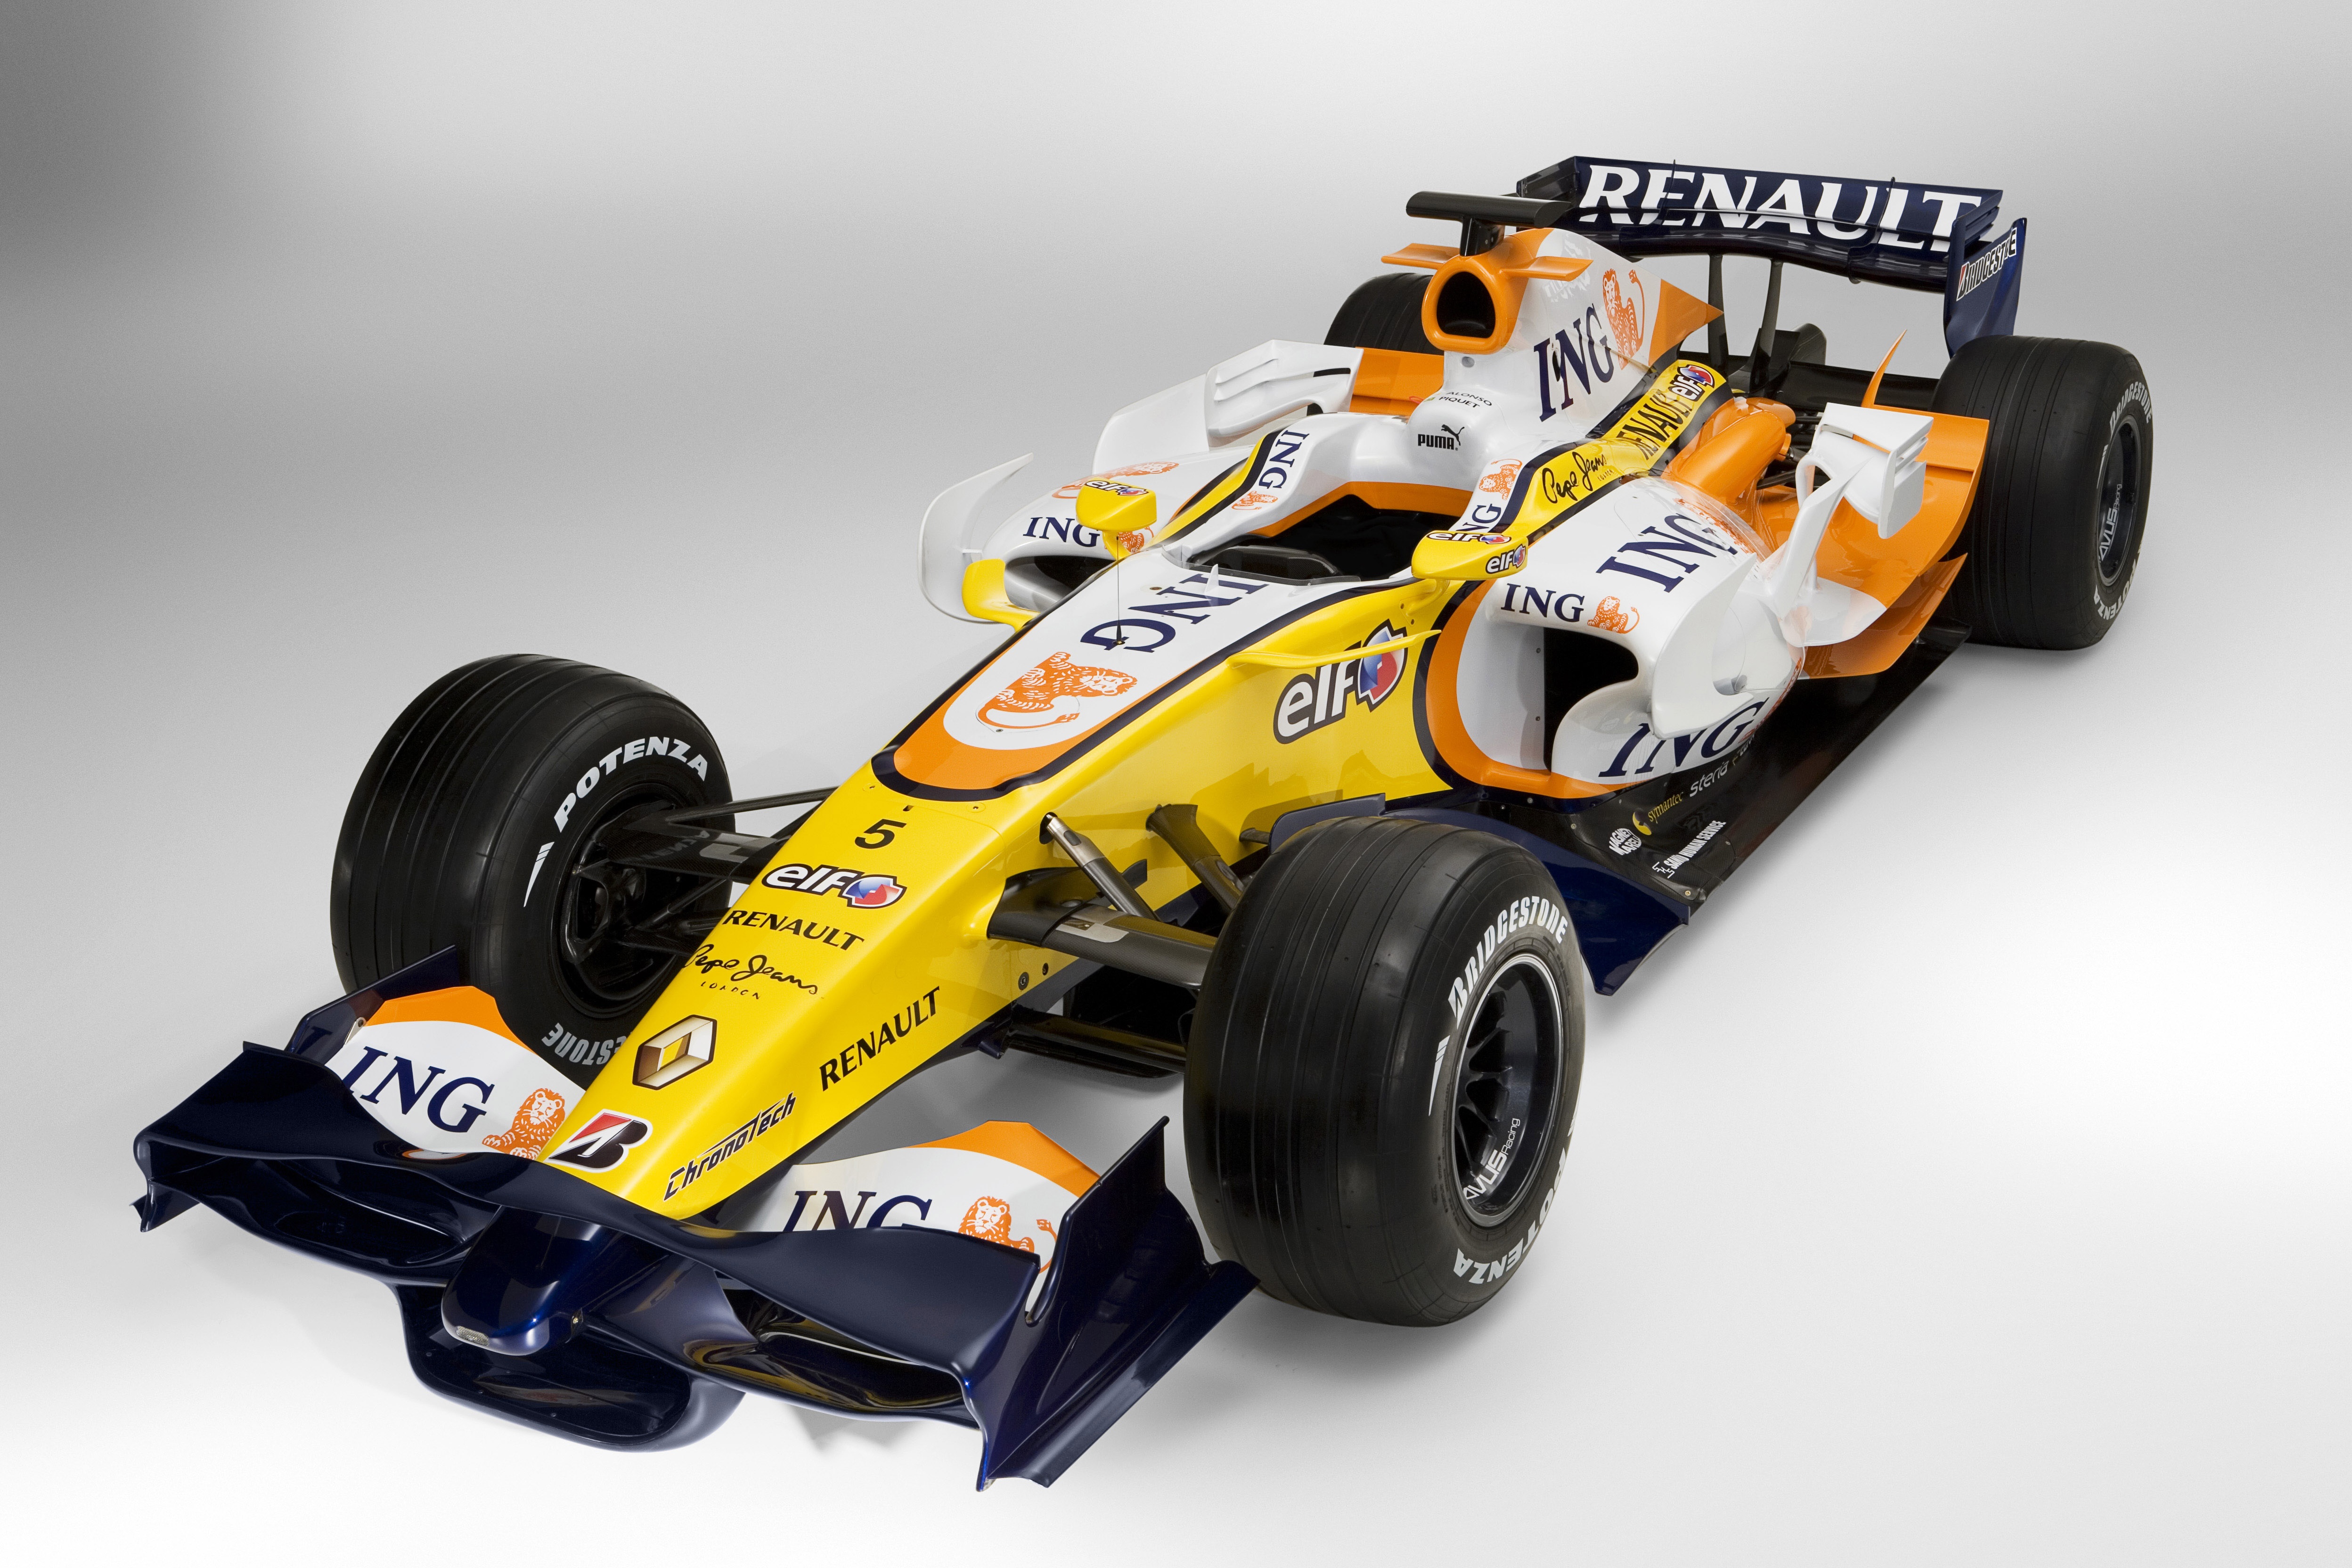 Renault F1 Backgrounds, Compatible - PC, Mobile, Gadgets| 4992x3328 px